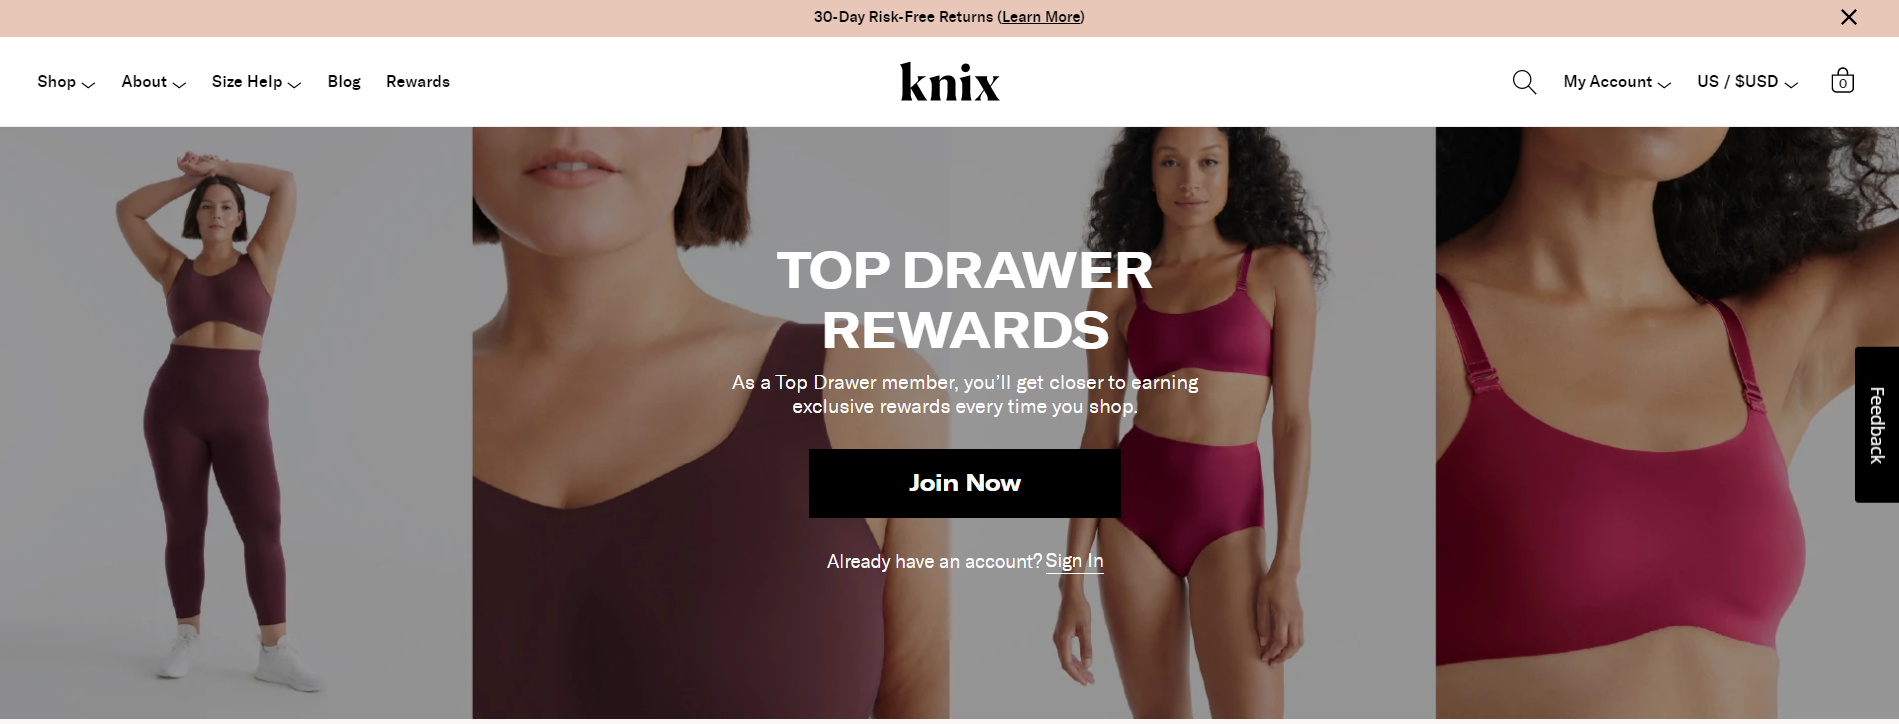 Knix intimate apparel brand